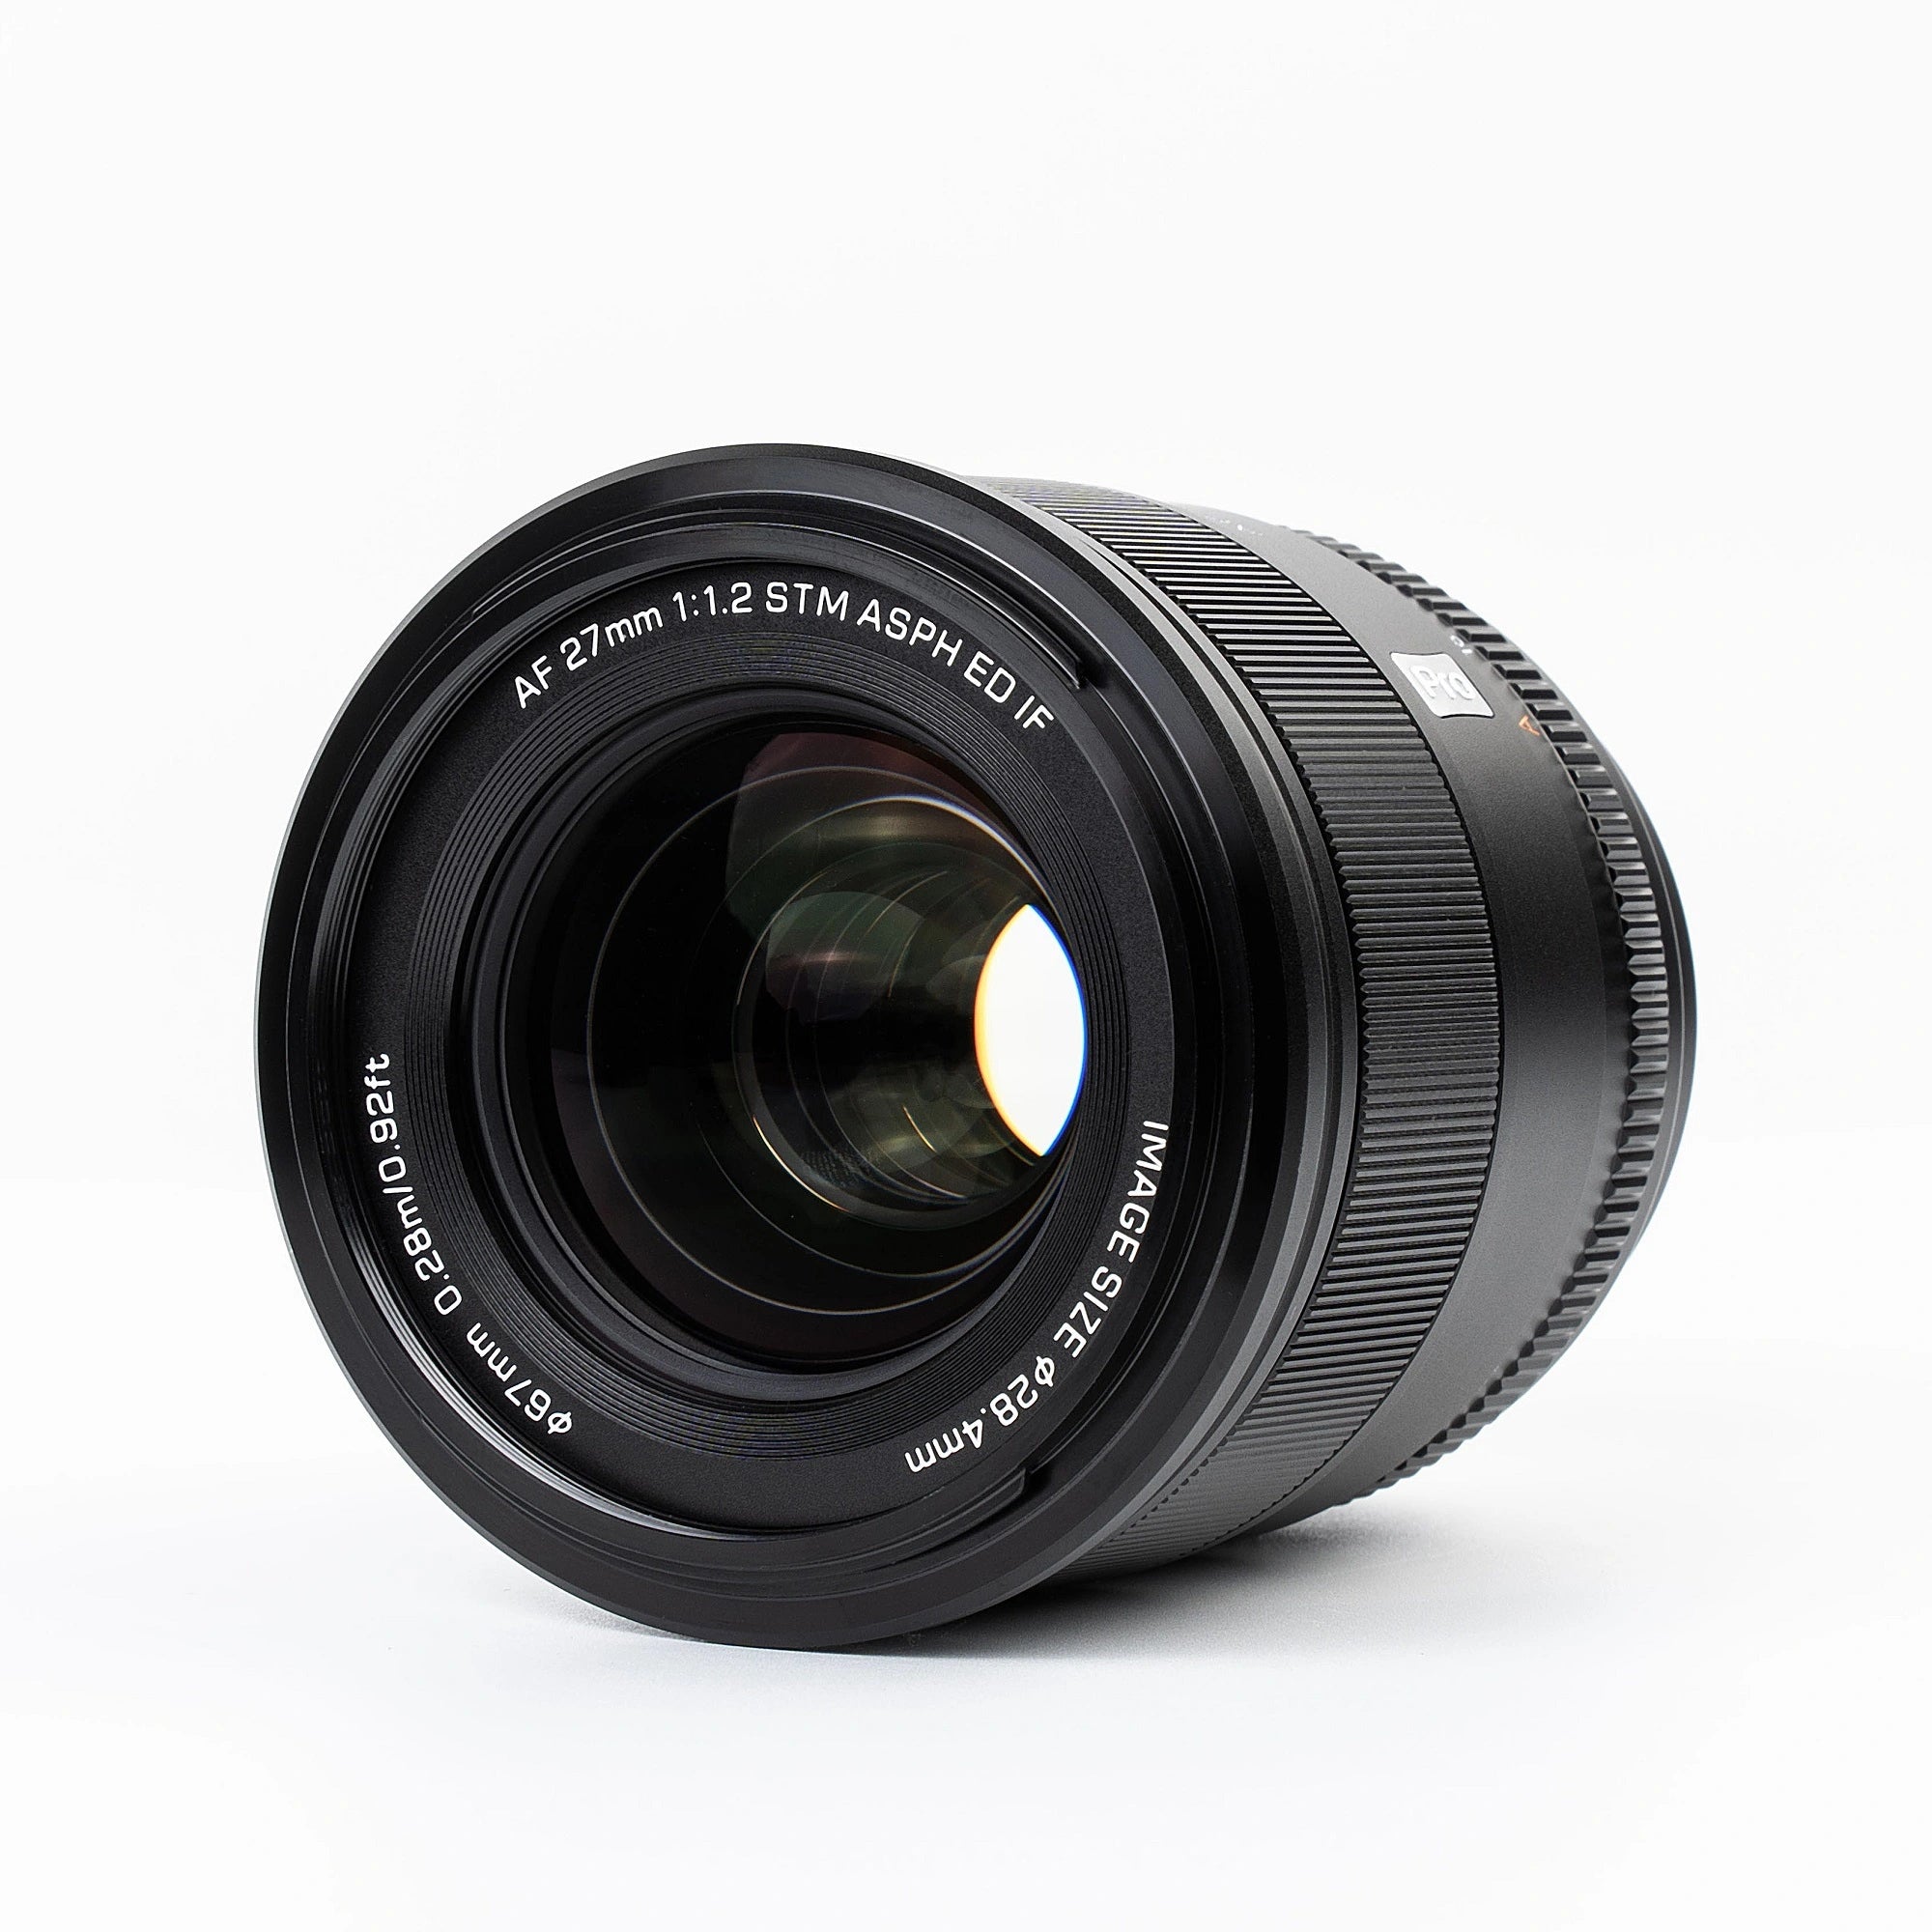 Viltrox 27mm F1.2 Pro Large Aperture Autofocus Lens for Fuji X-Mount Mirrorless Cameras